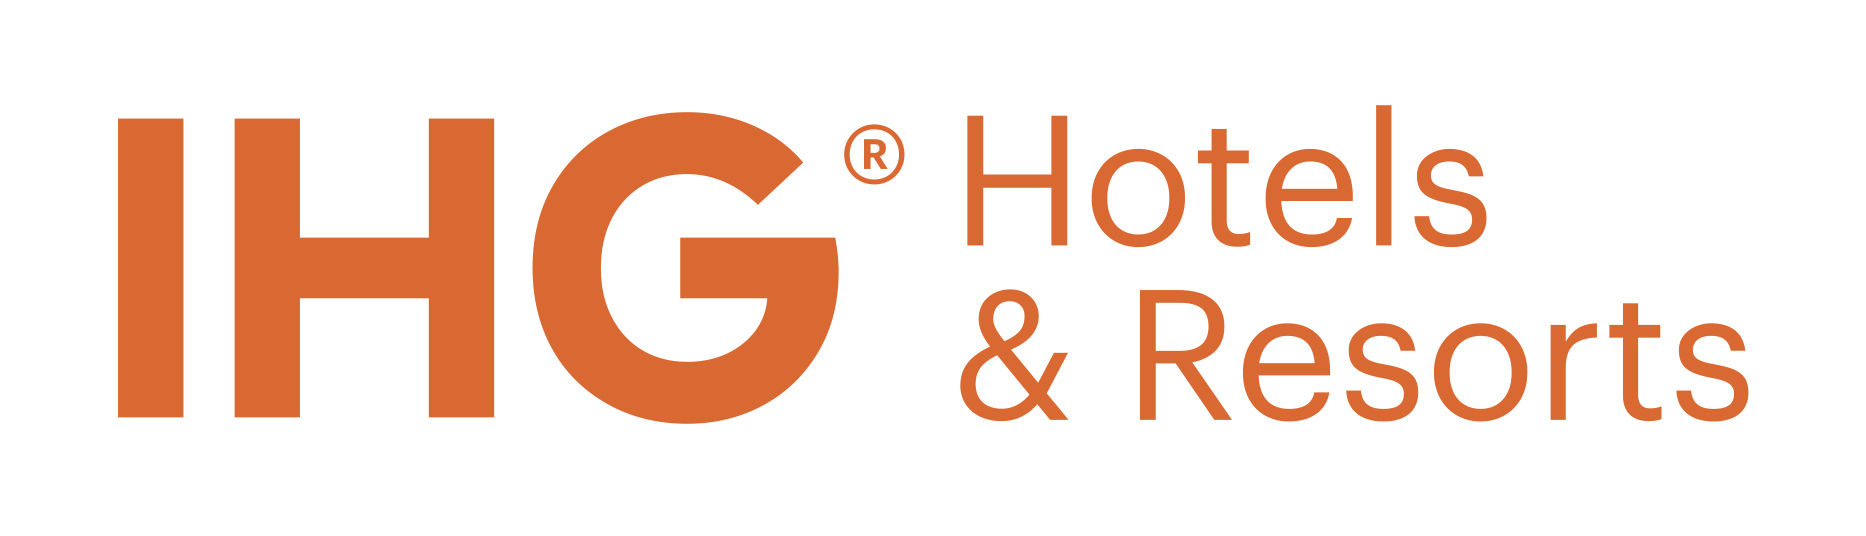 clients-logos-hospitality-11